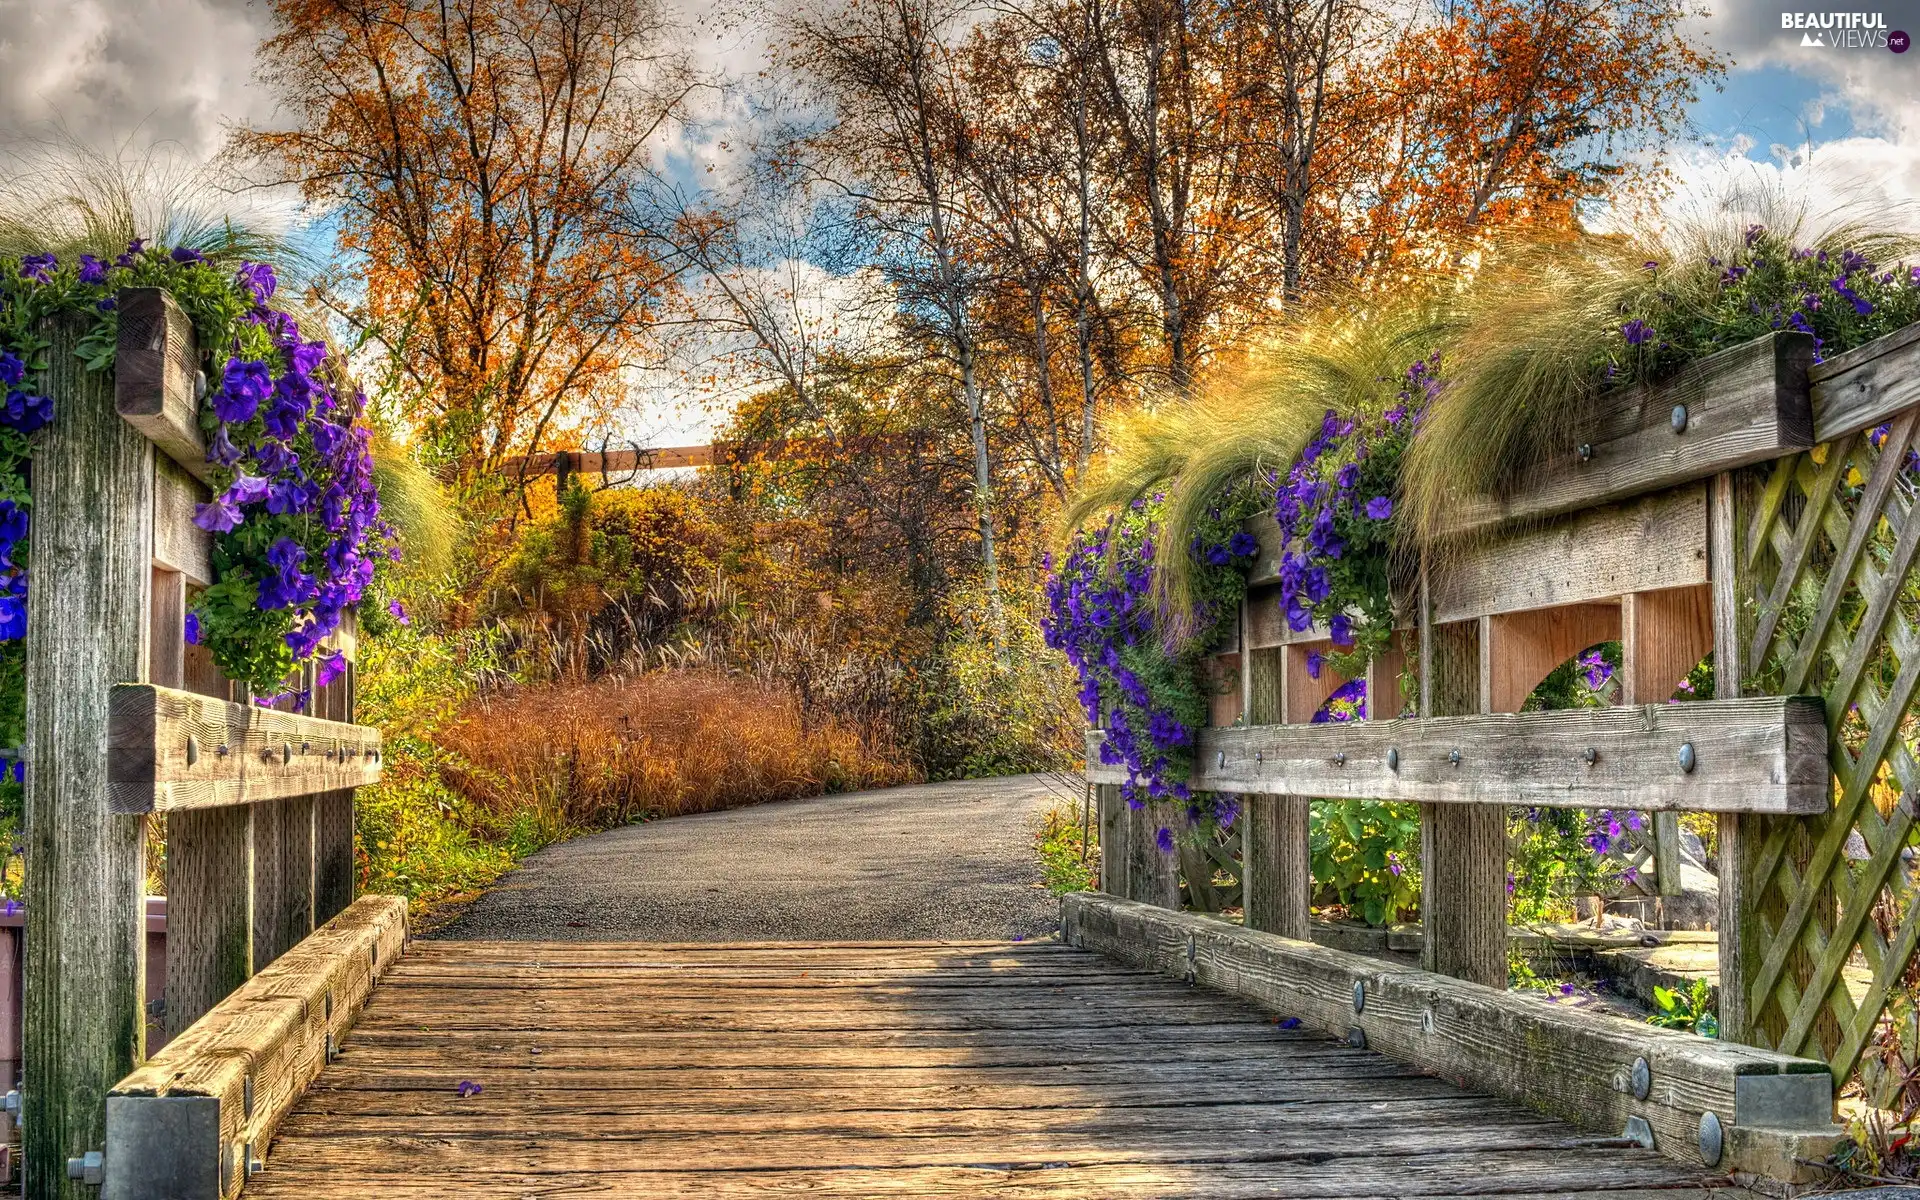 Way, bridges, viewes, Flowers, wooden, trees, autumn